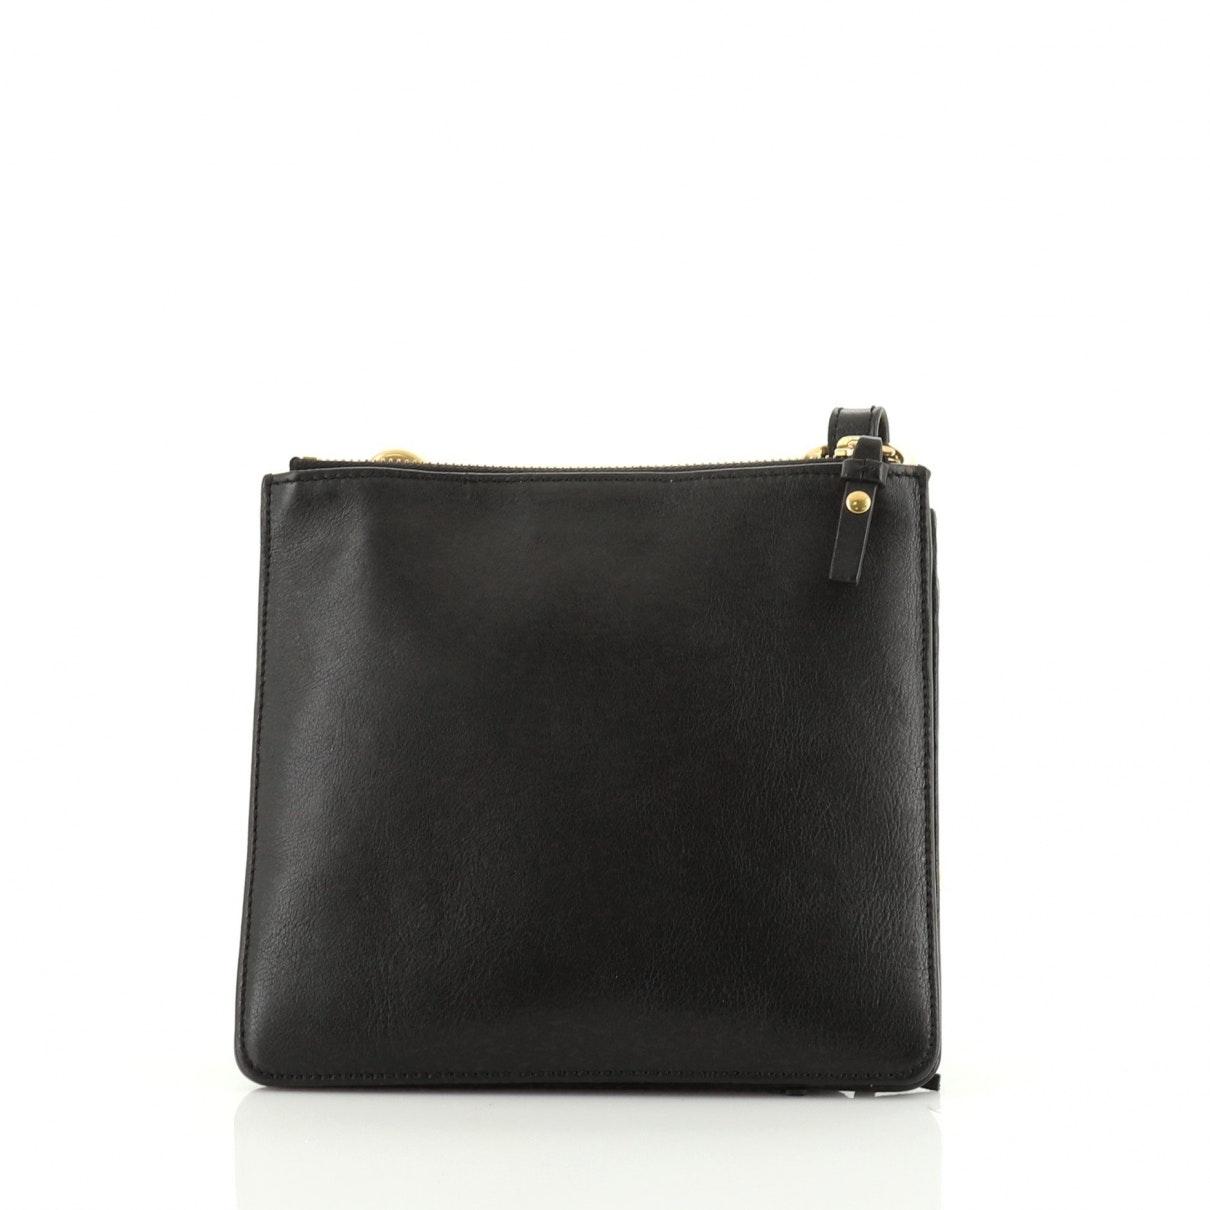 Chloé Leather Handbag in Black - Lyst